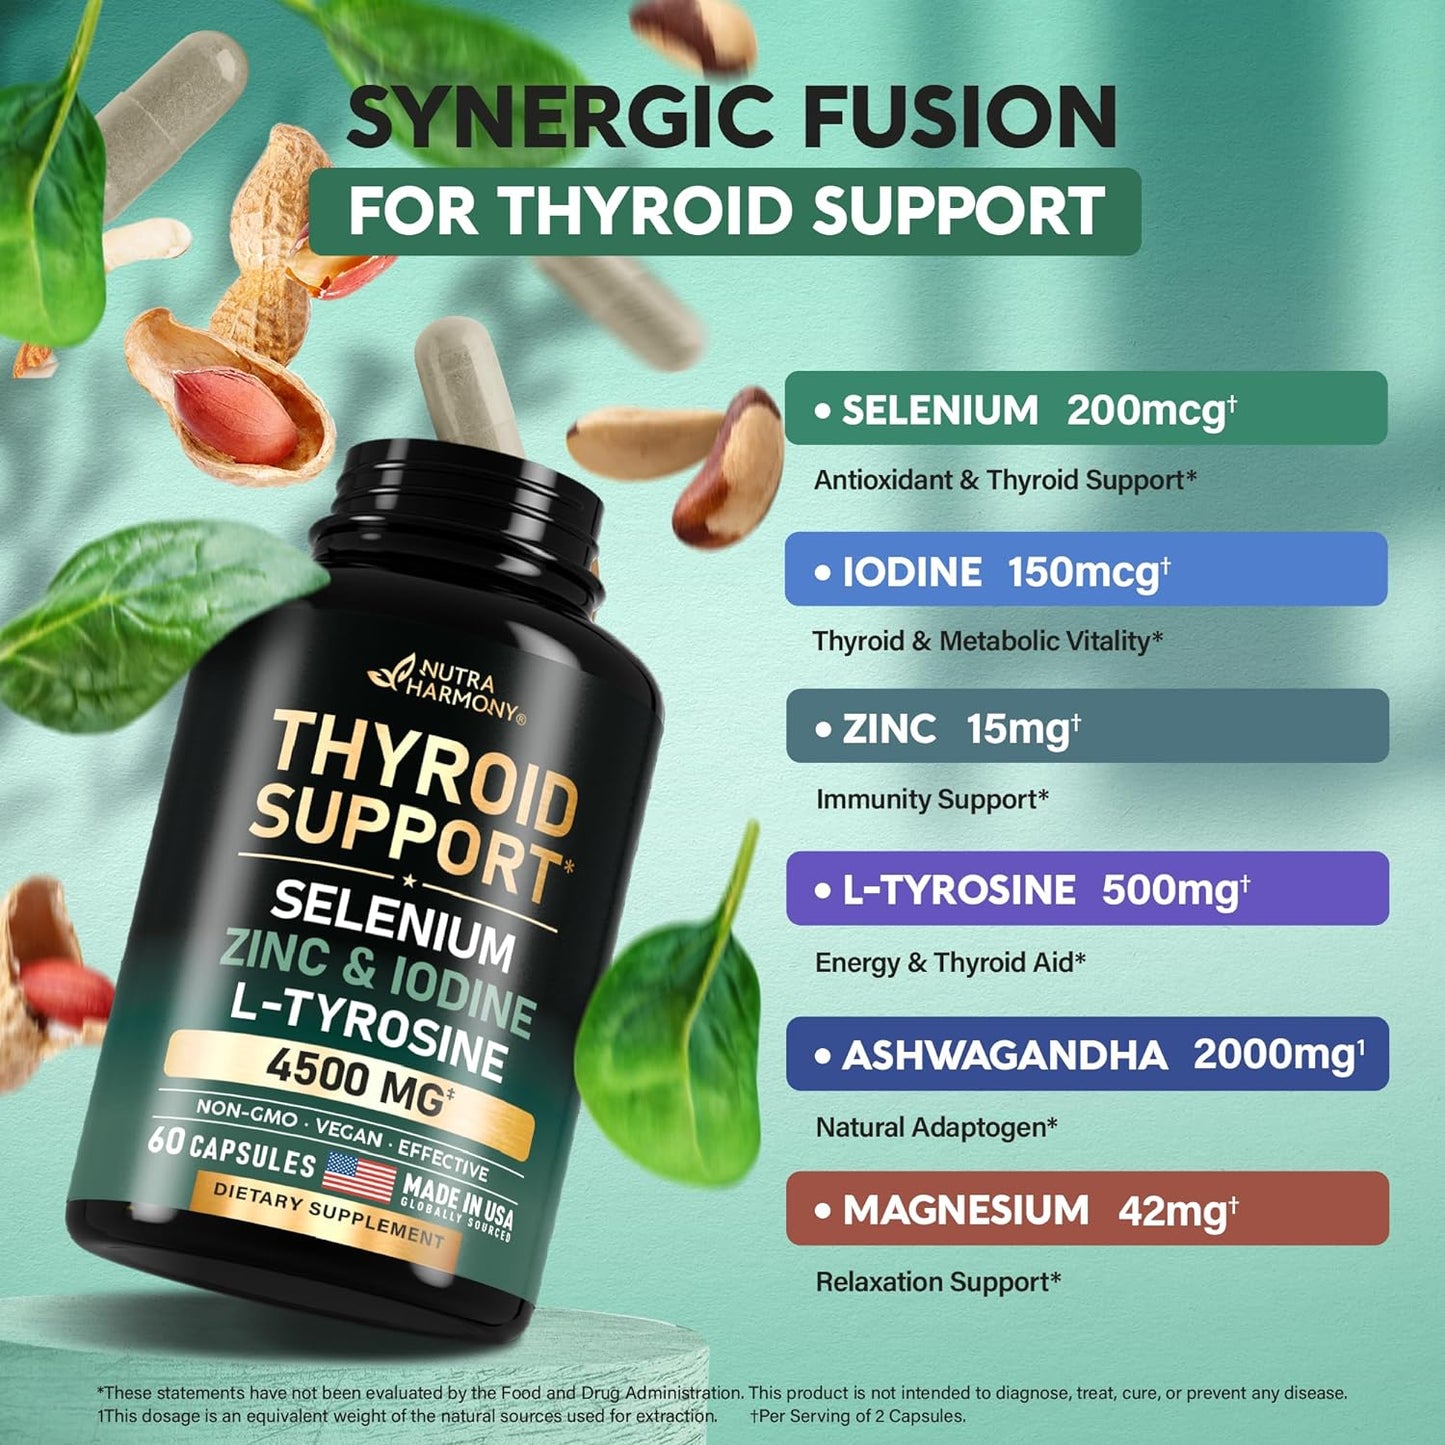 Thyroid Support with Selenium, Zinc & Iodine, L-Tyrosine, Magnesium, Adaptogen Herbs